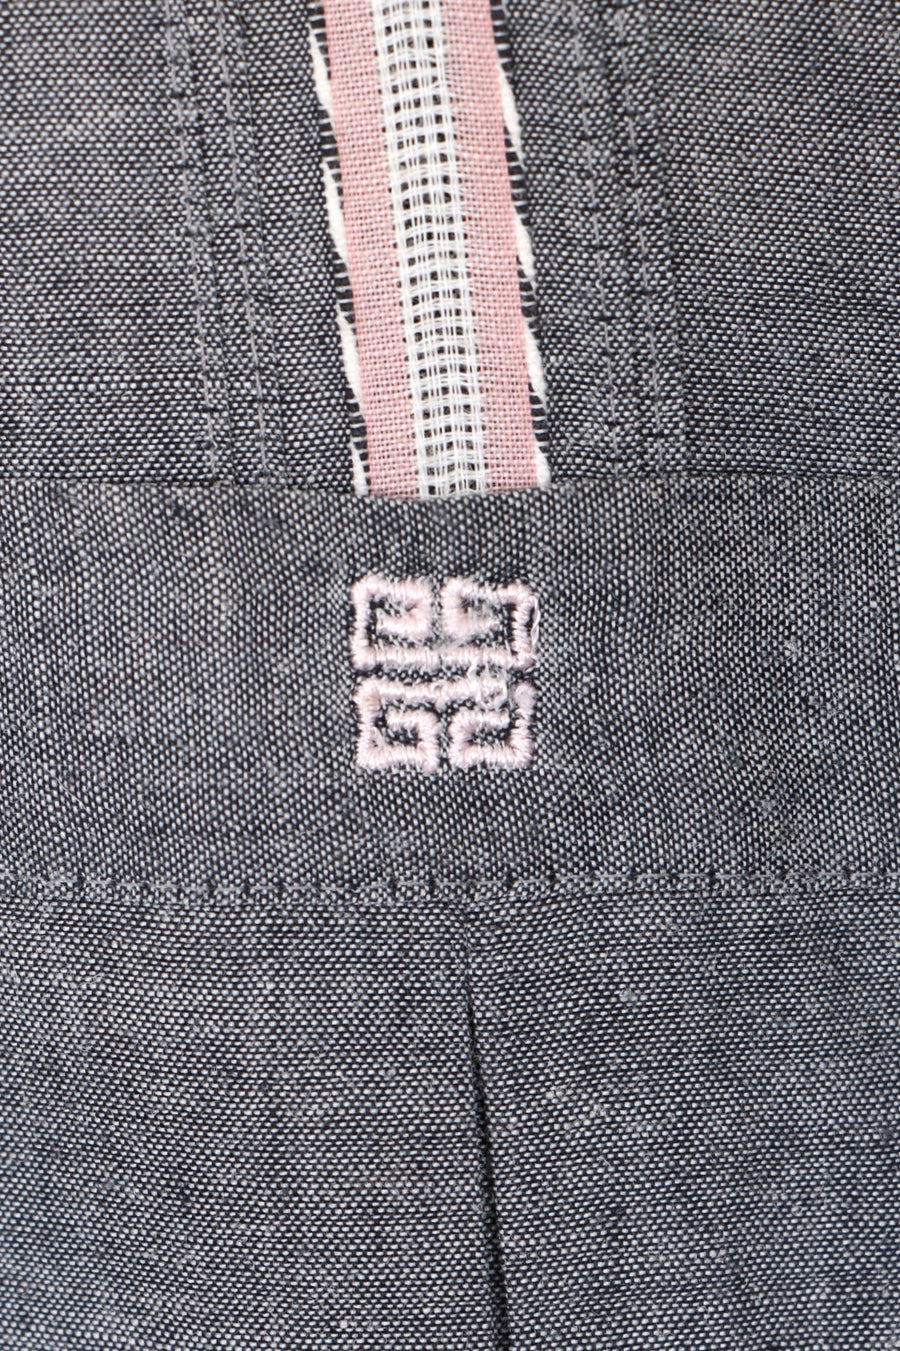 Vintage MONSIEUR GIVENCHY Pink & Grey Short Sleeve Utility Shirt (L)